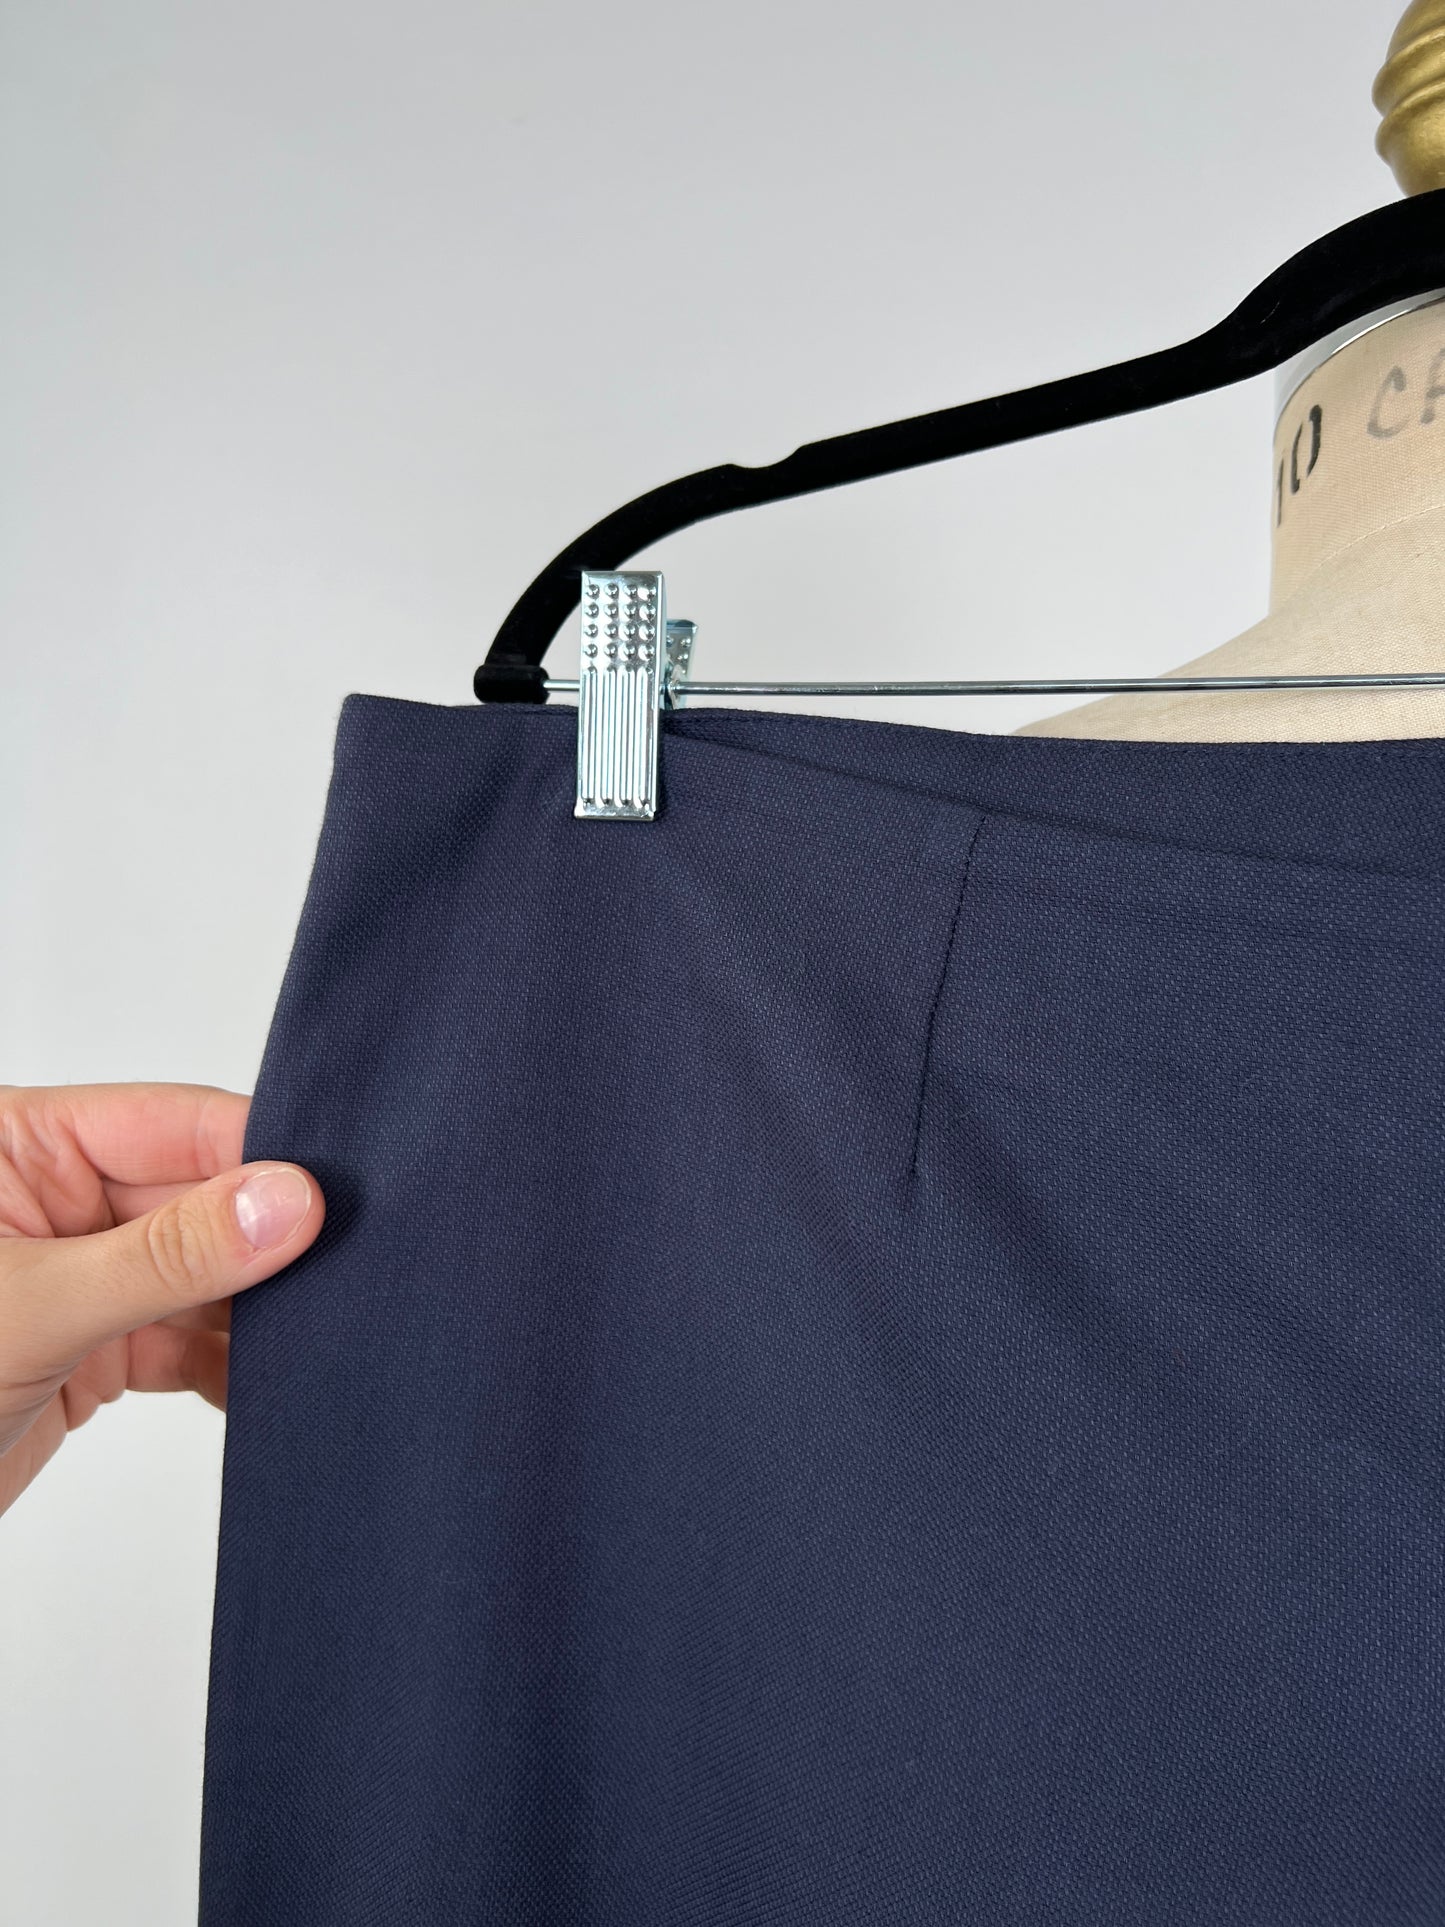 Pantalon marine en coton tissé (XL)